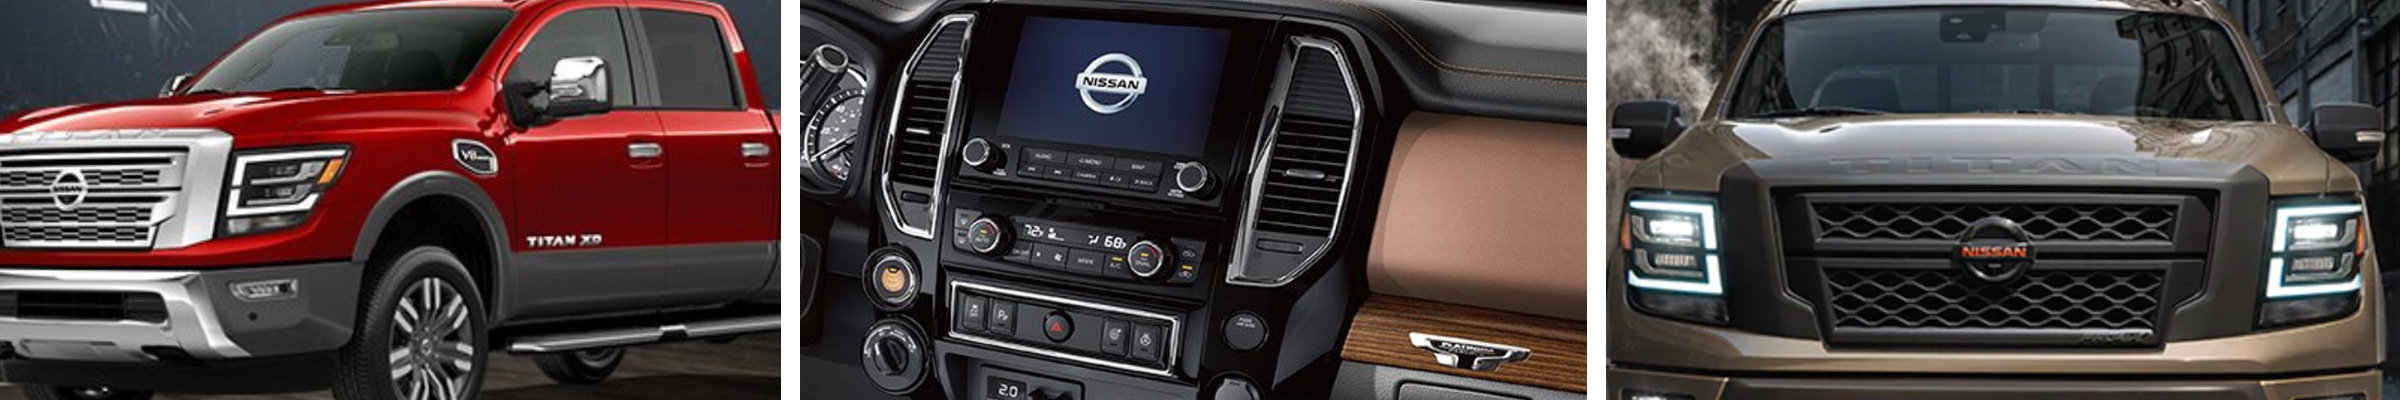 2020 Nissan Titan XD For Sale Hoffman Estates IL | Schaumburg